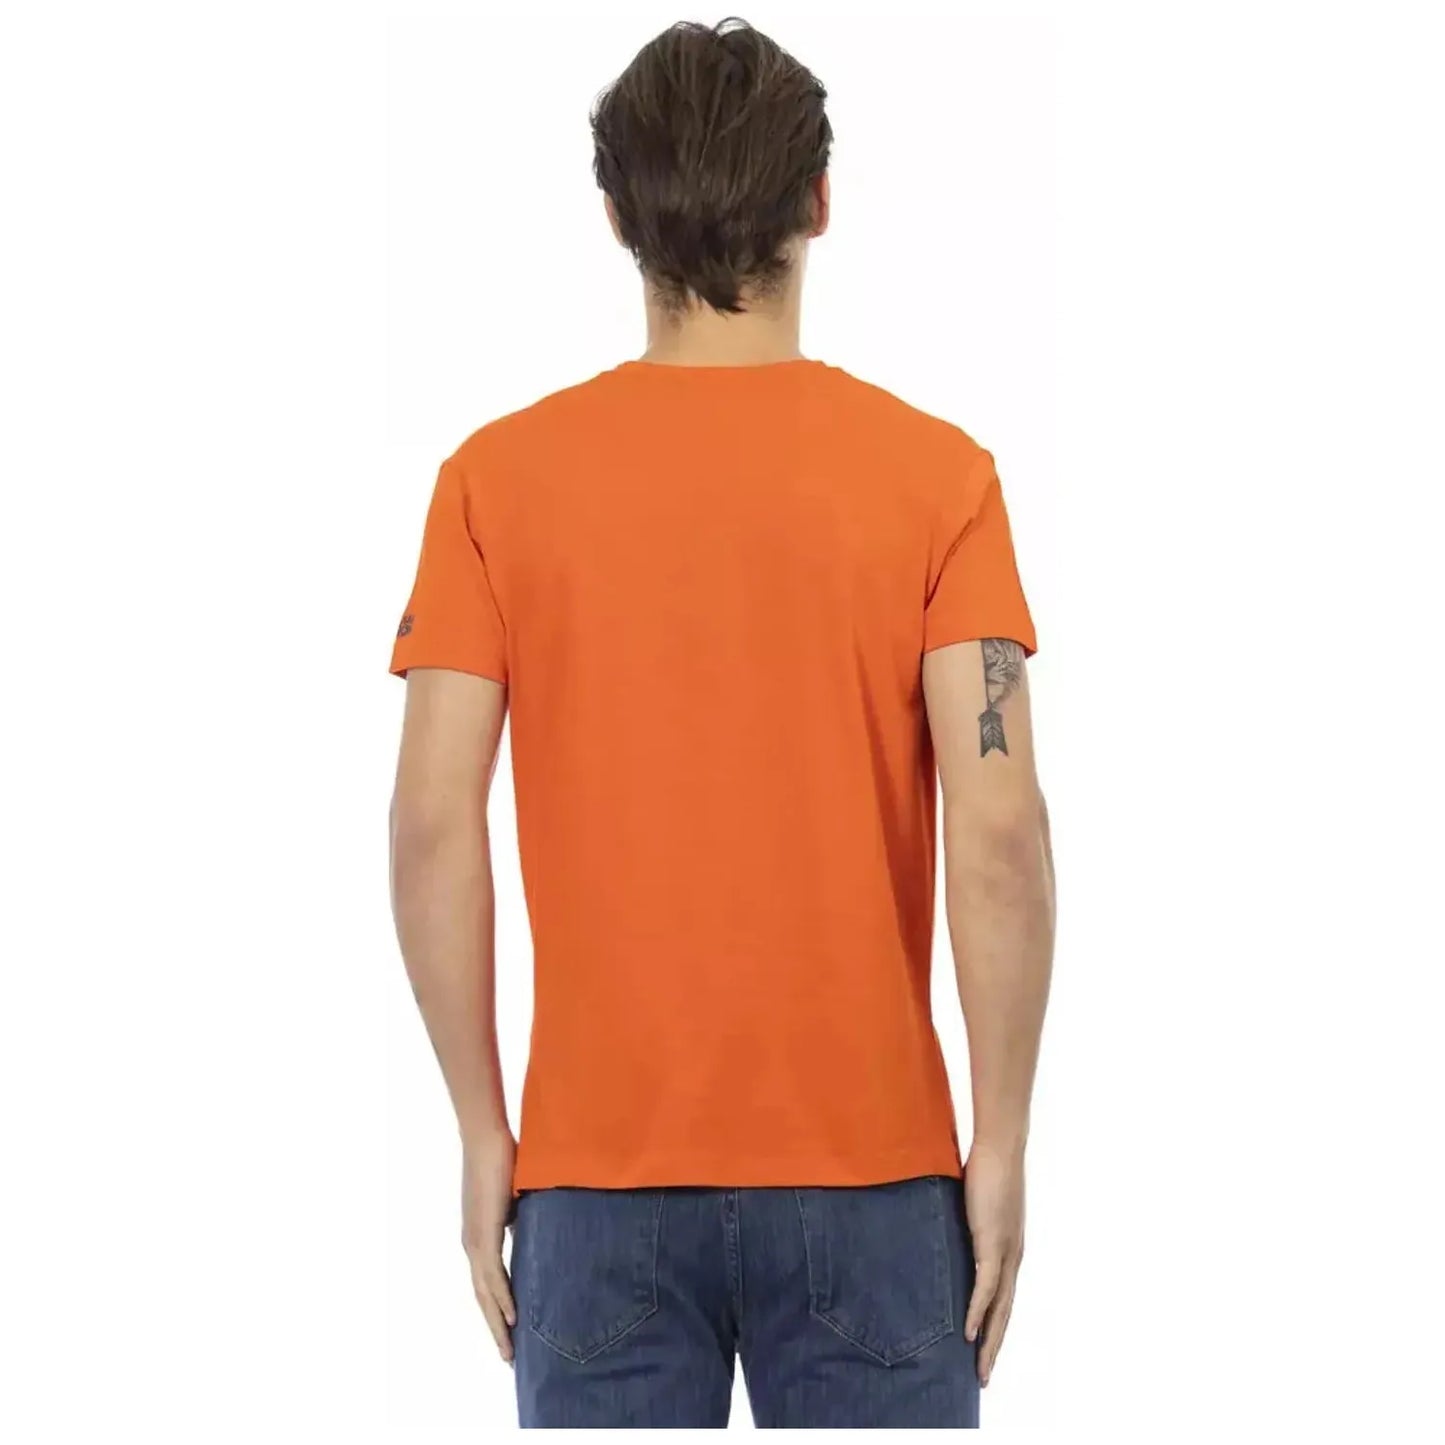 Trussardi Action Elegant V-Neck Tee with Vibrant Front Print orange-cotton-t-shirt-7 product-22874-1742851970-19-424f4769-97c.webp